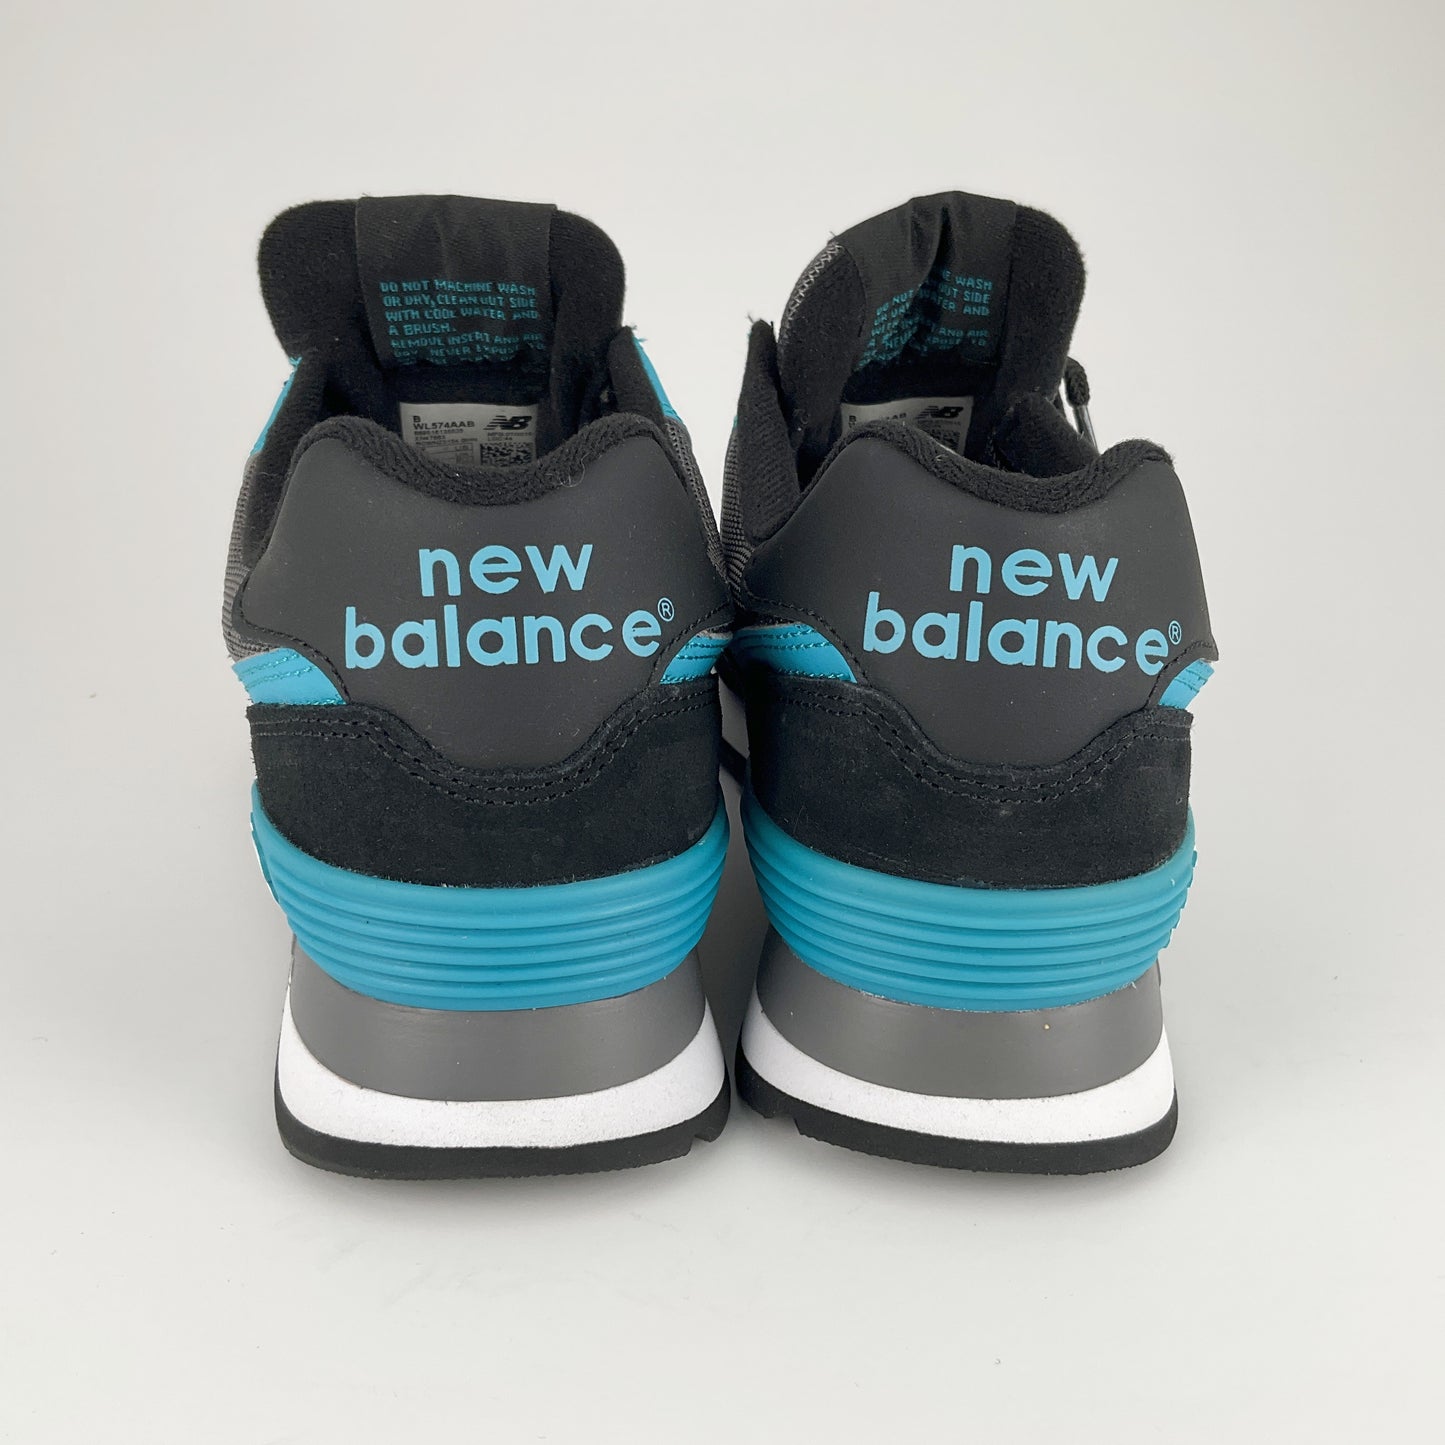 New Balance - 574 Sneakers - Size UK 5